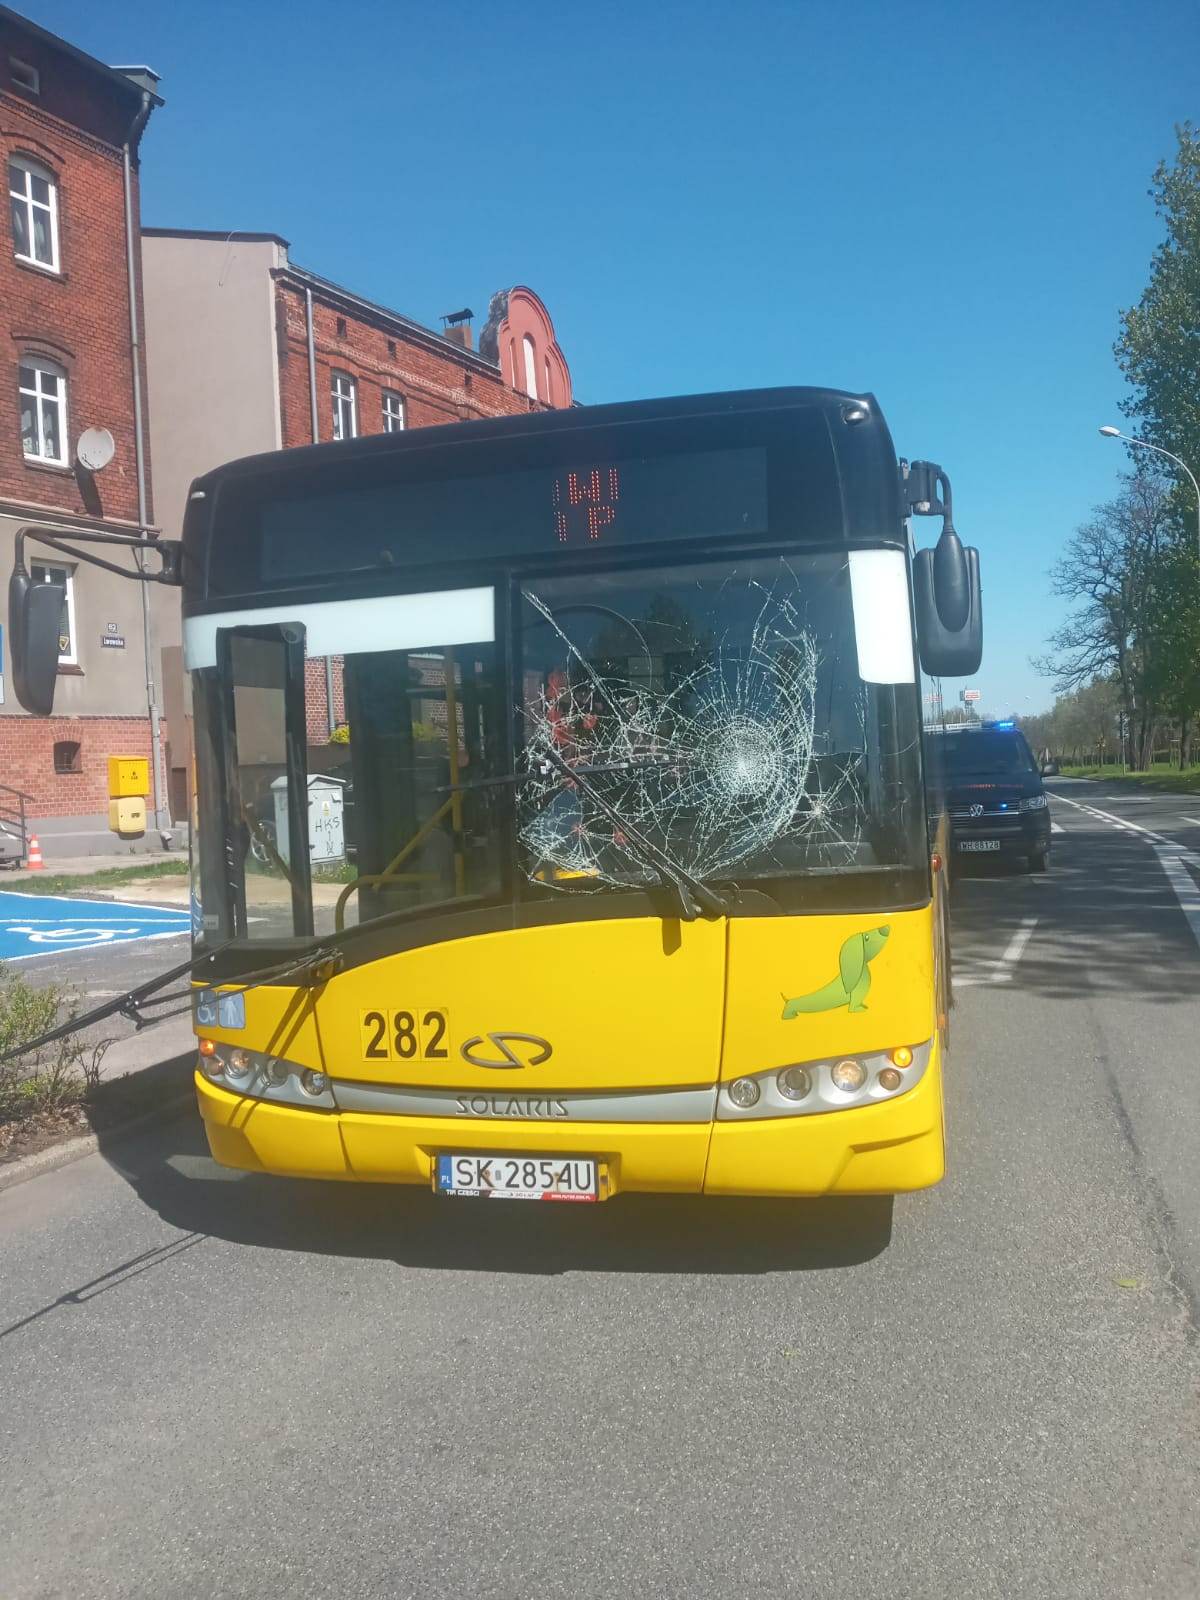 autobus PKM Katowice